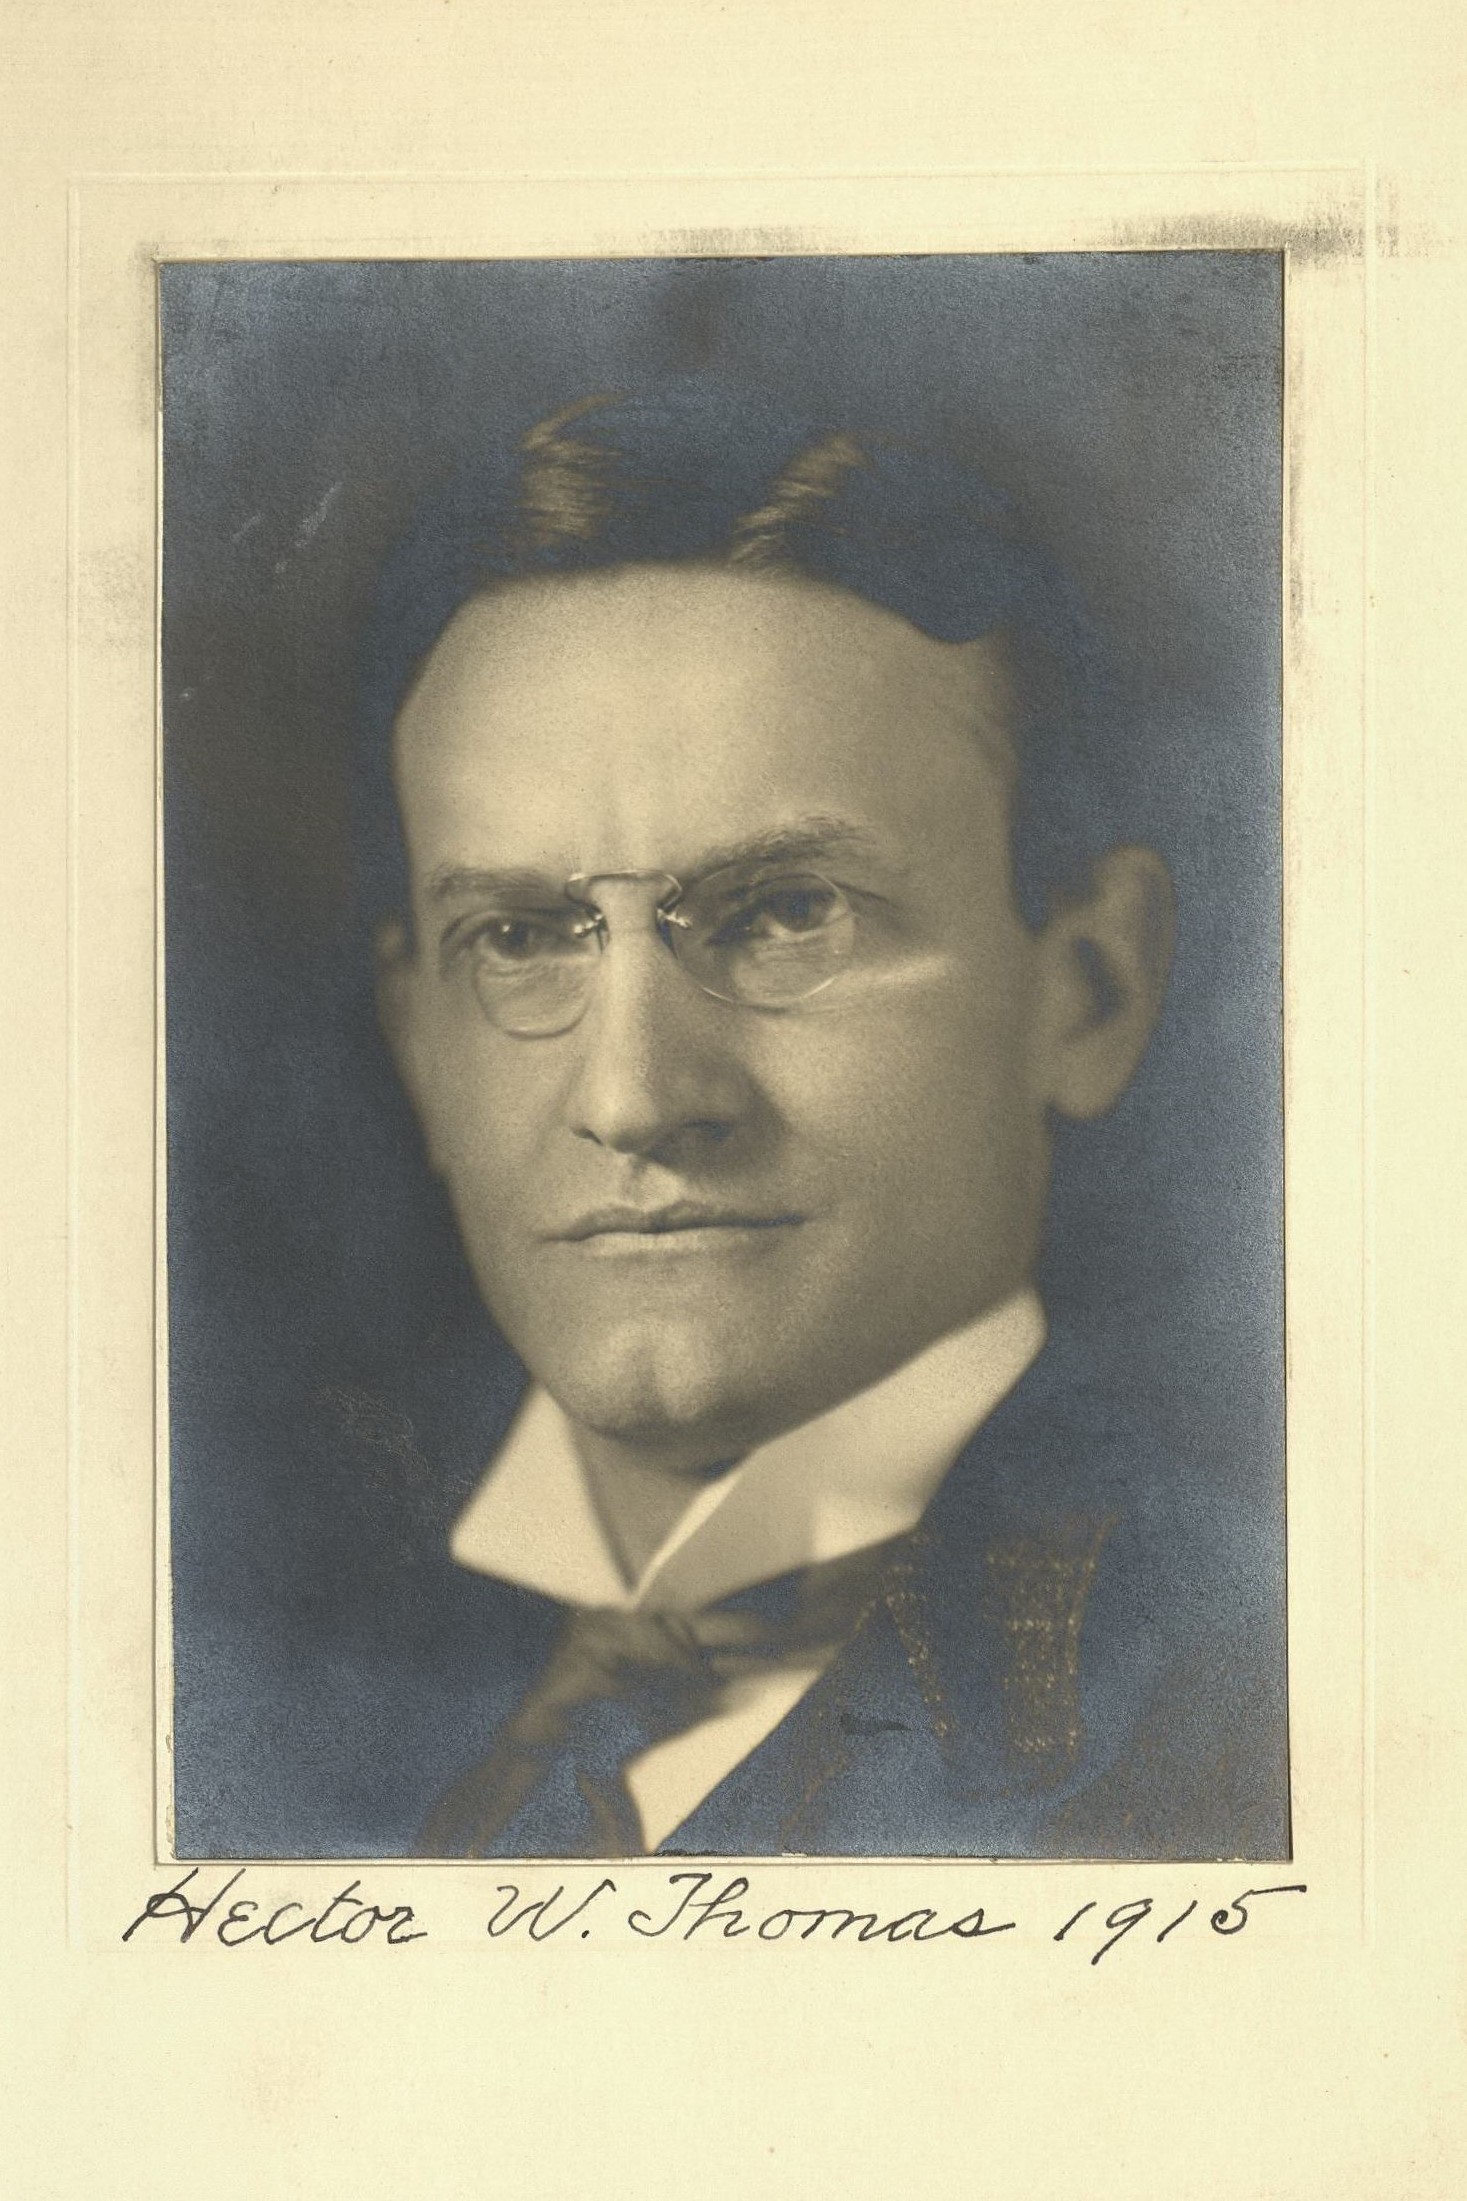 Member portrait of Hector W. Thomas